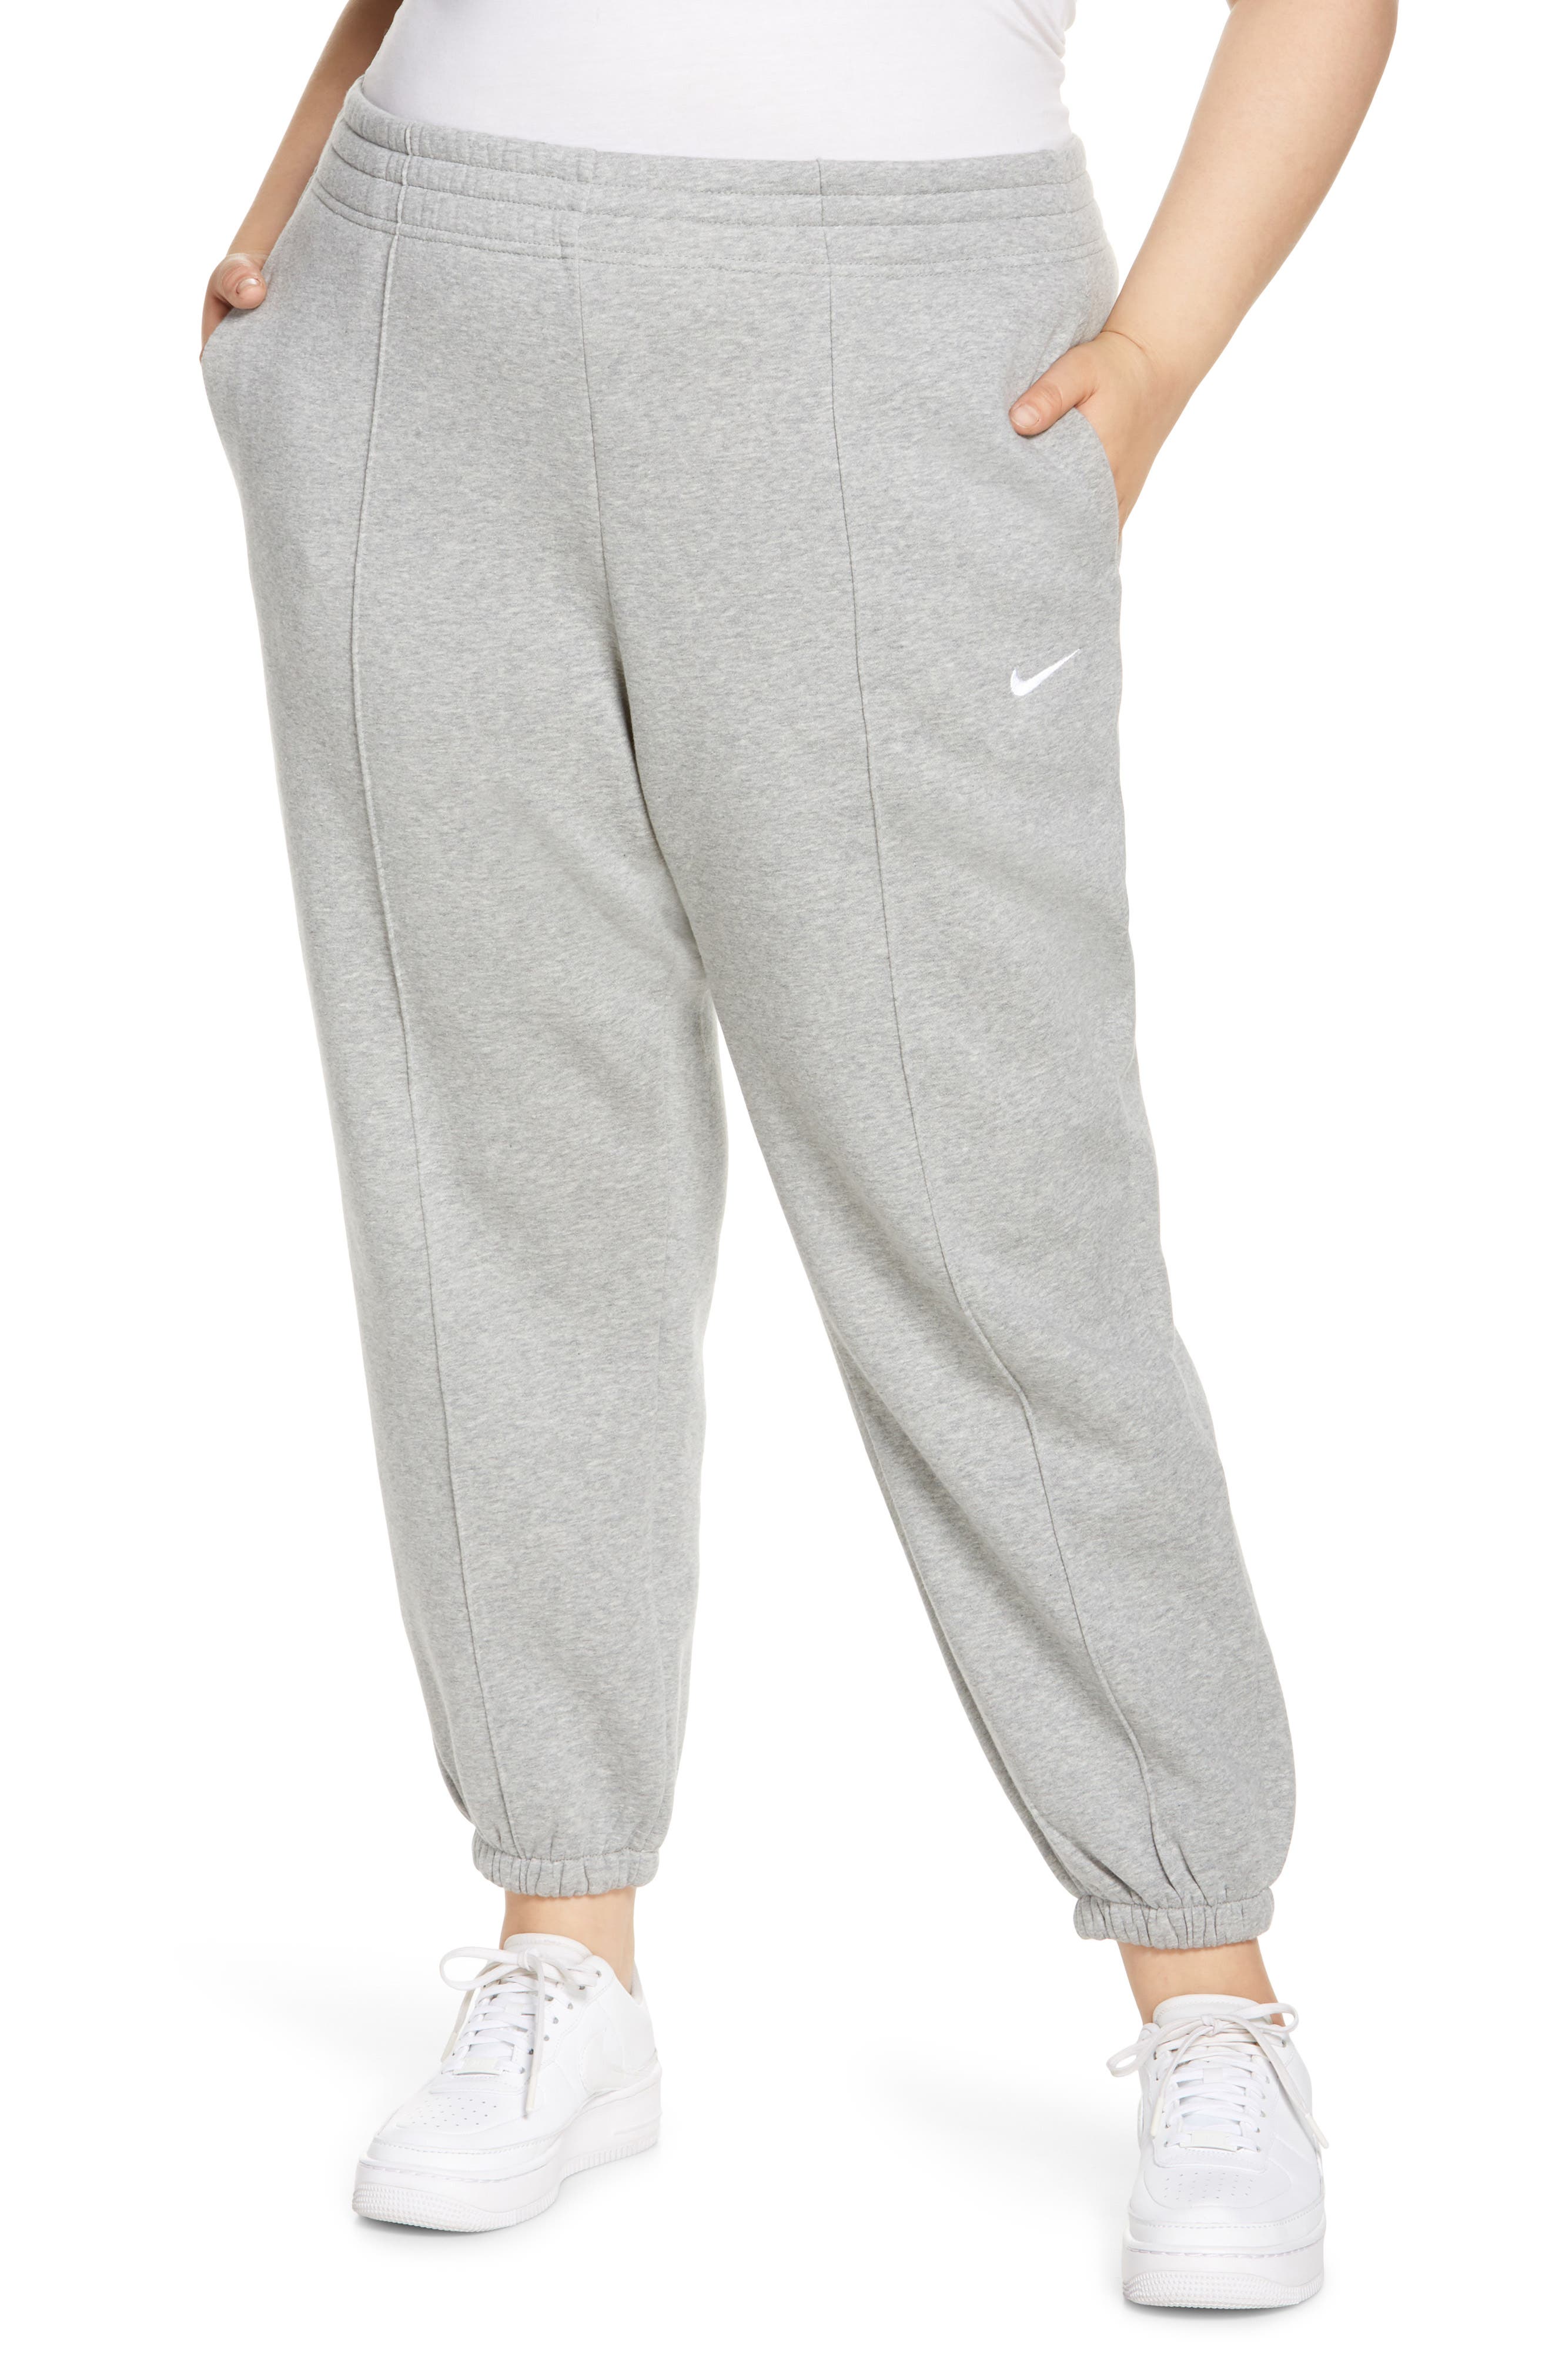 nike women's gray sweatpants